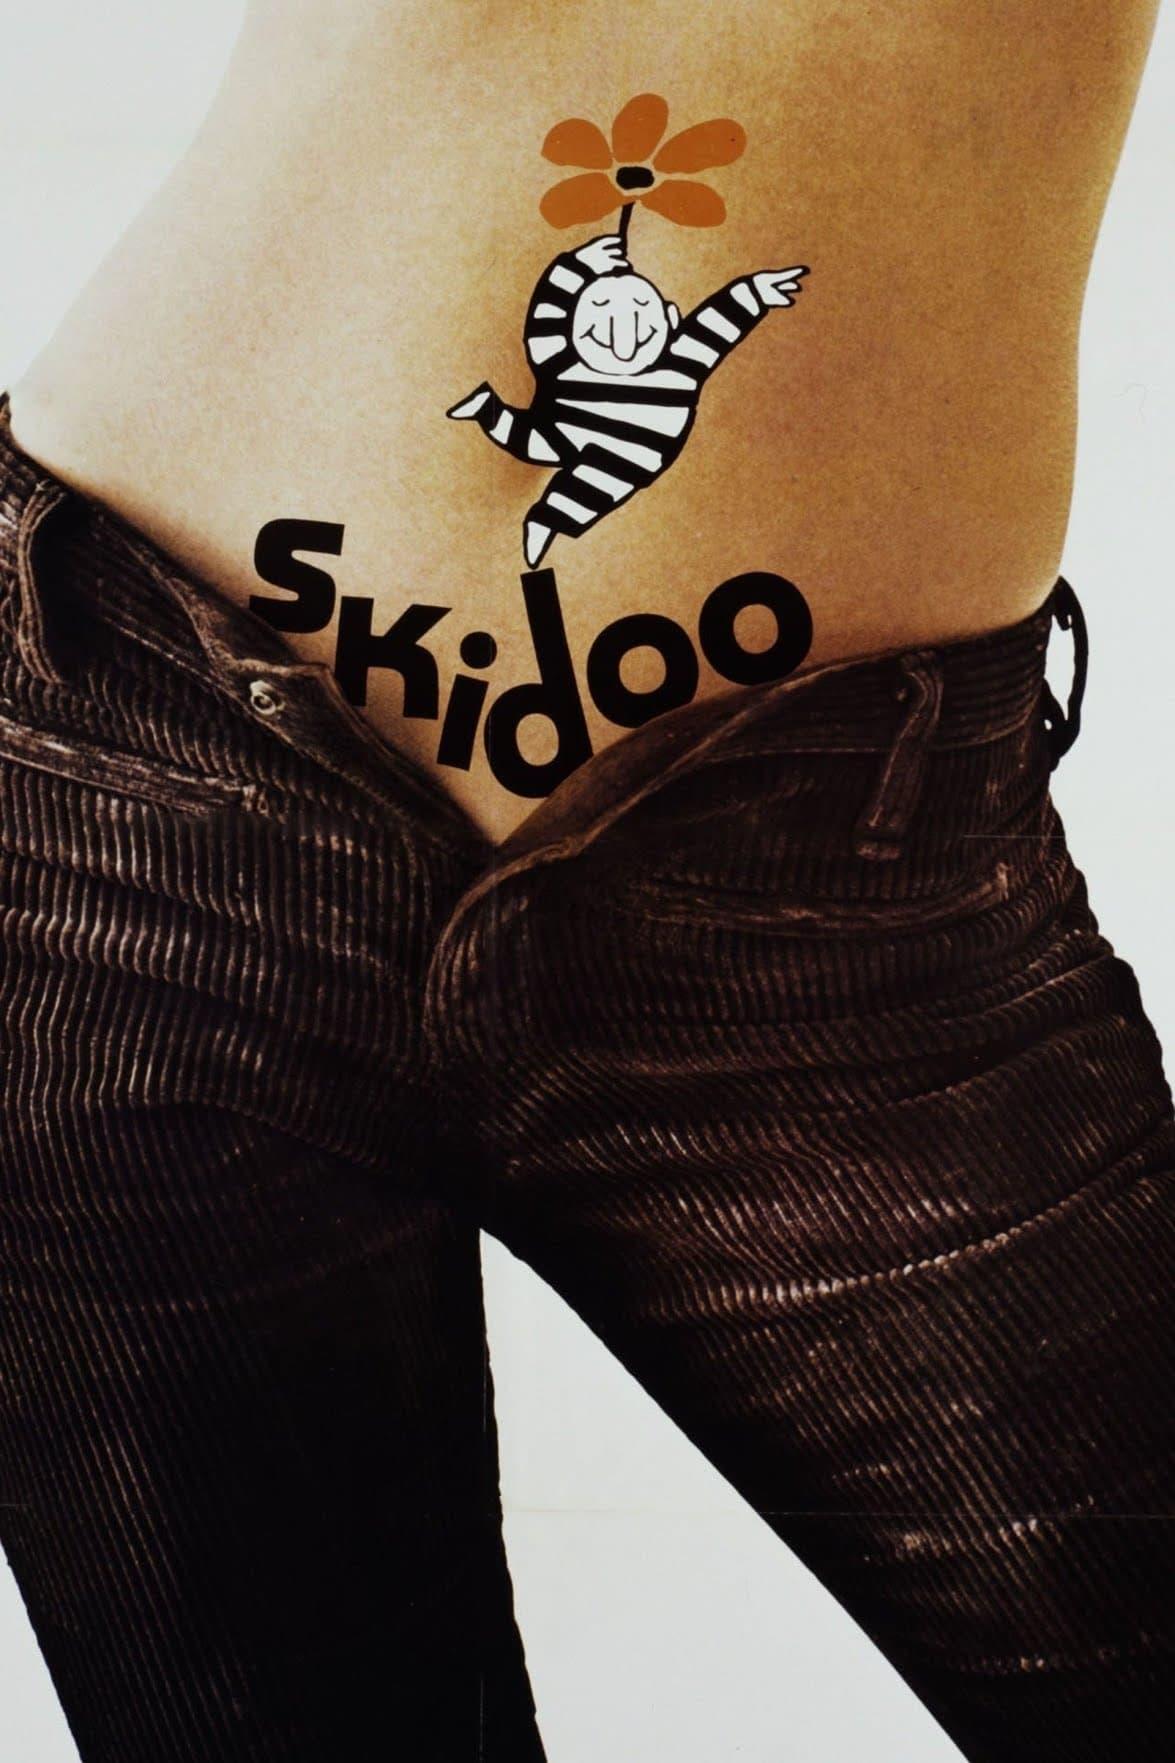 Skidoo poster